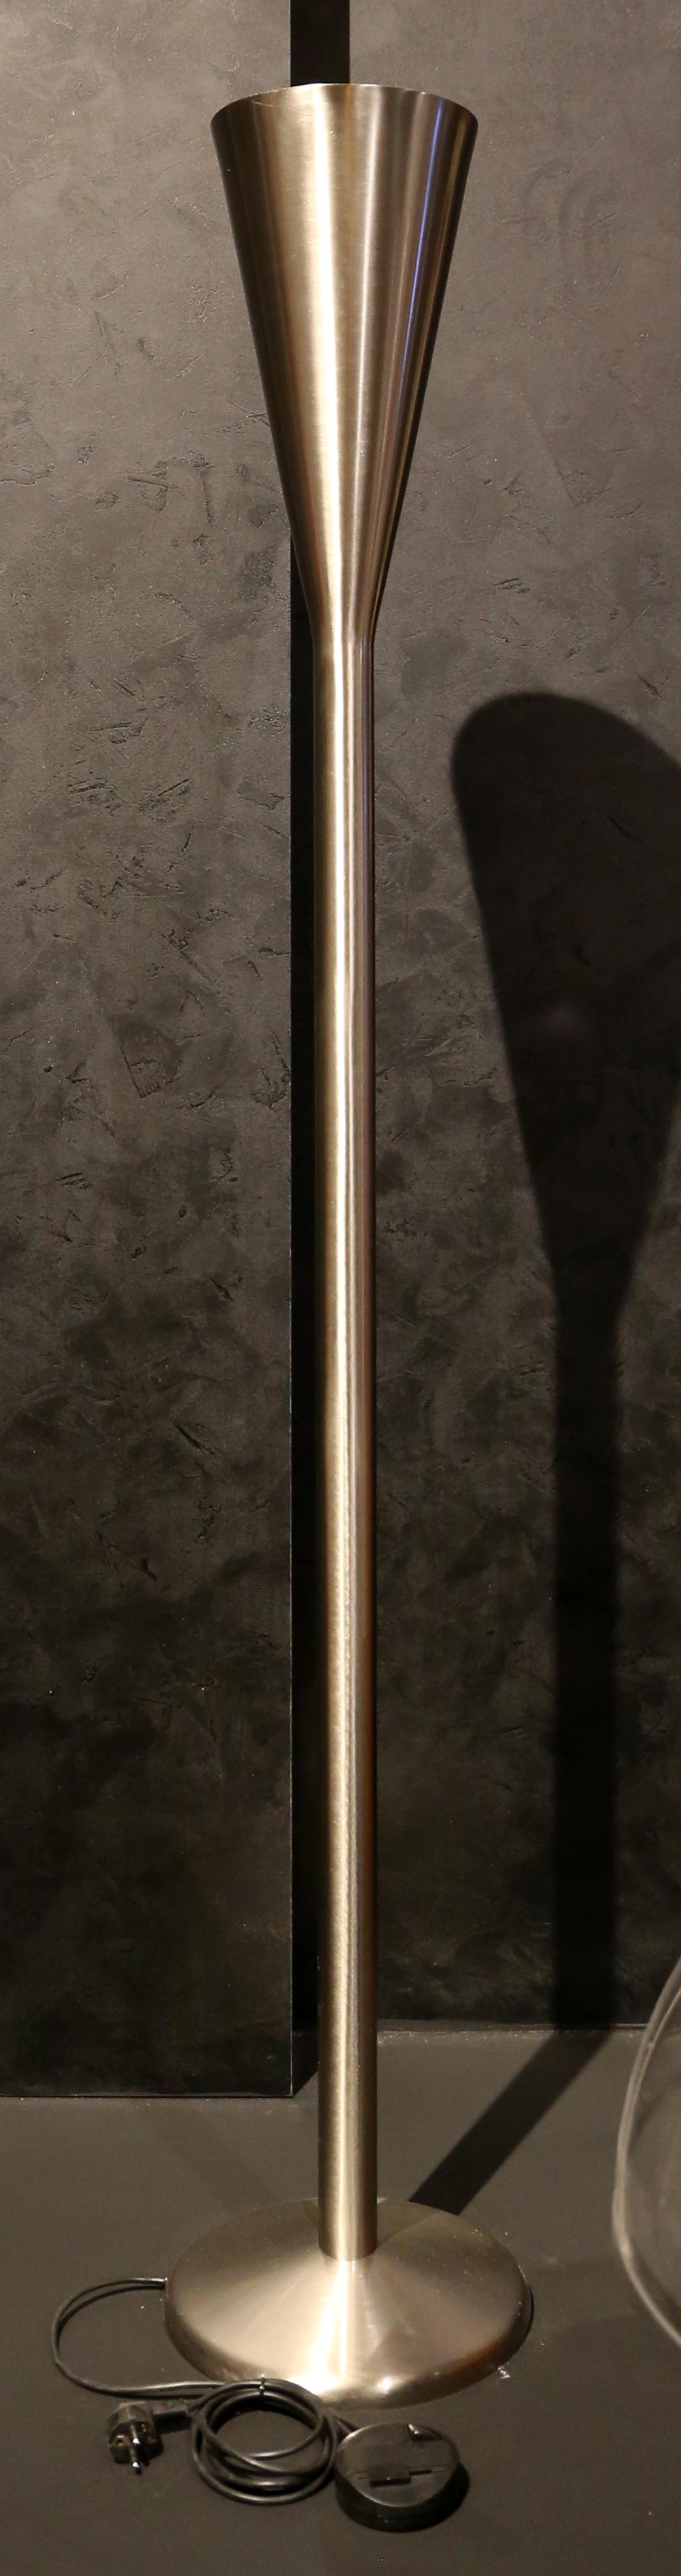 Modern FontanaArte Luminator Floor Lamp by Pietro Chiesa 1933 Nickel-plated Brass MCM